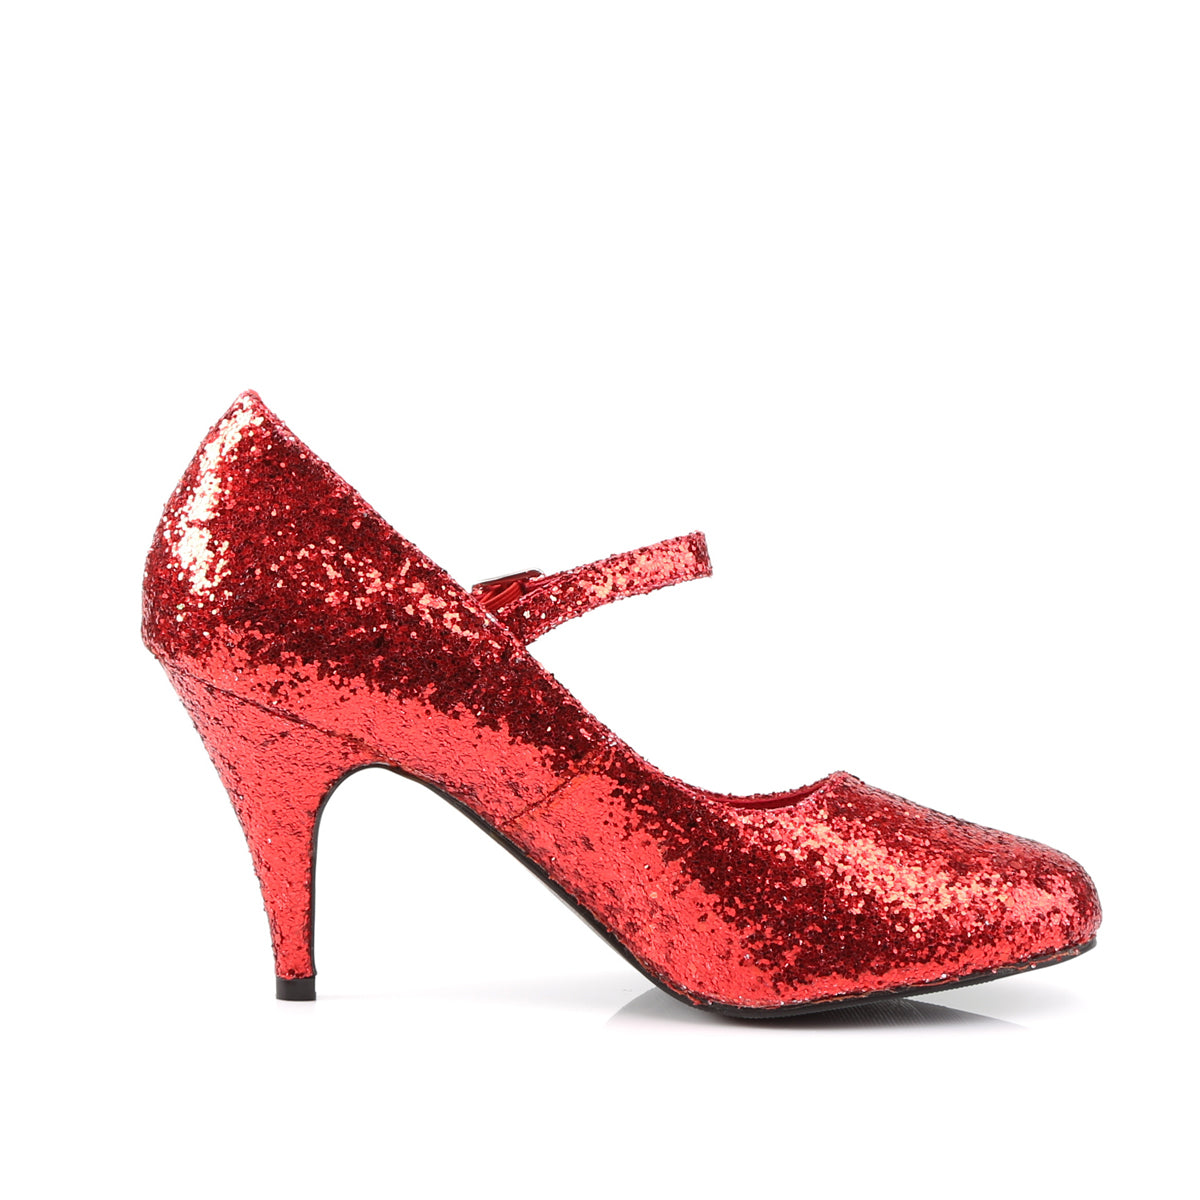 GLINDA-50G Funtasma Fantasy Red Gltr Women's Shoes [Fancy Dress Costume Shoes]